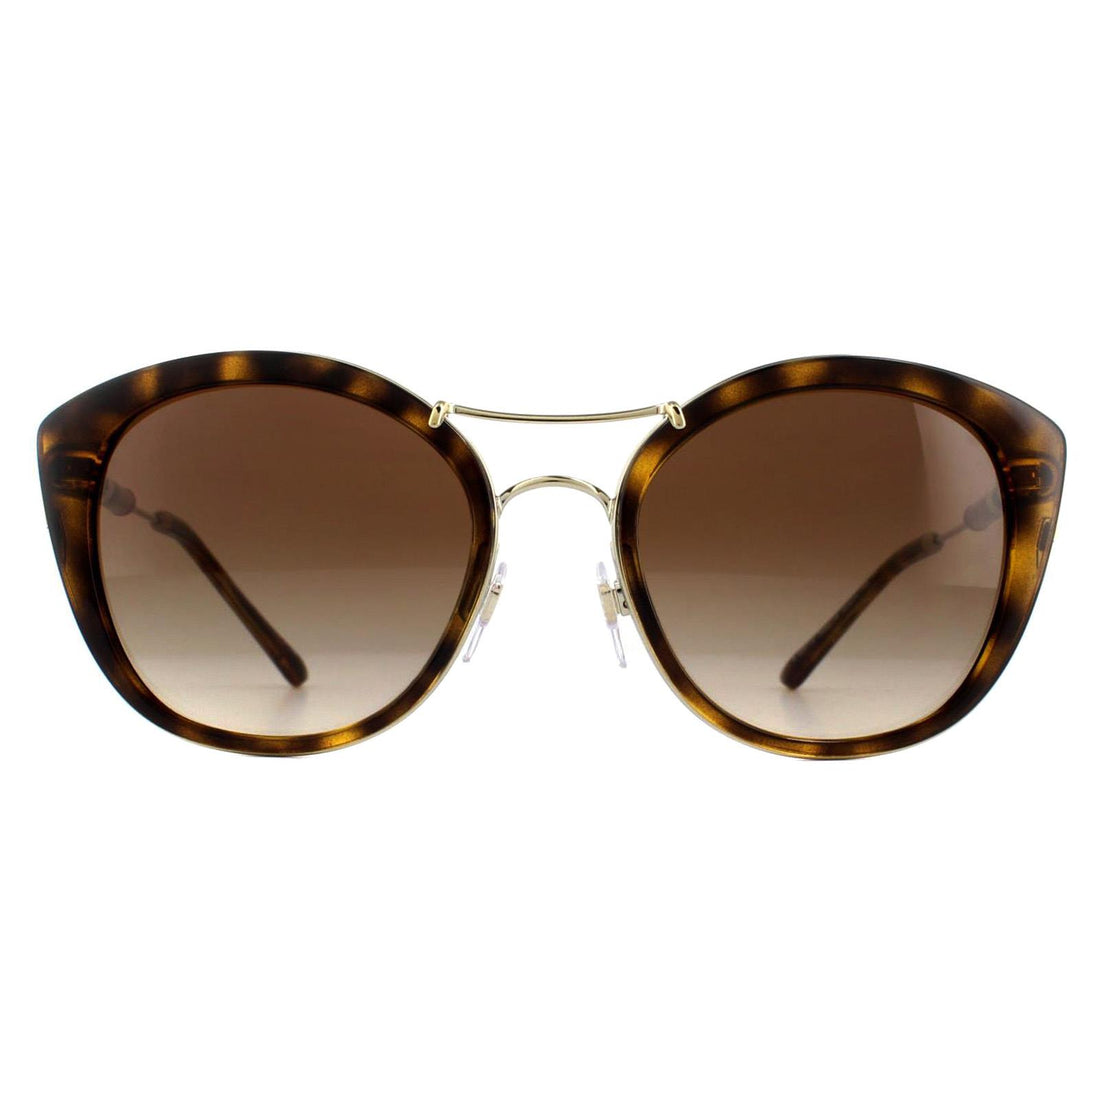 Burberry BE4251Q Sunglasses Dark Havana Brown Gradient